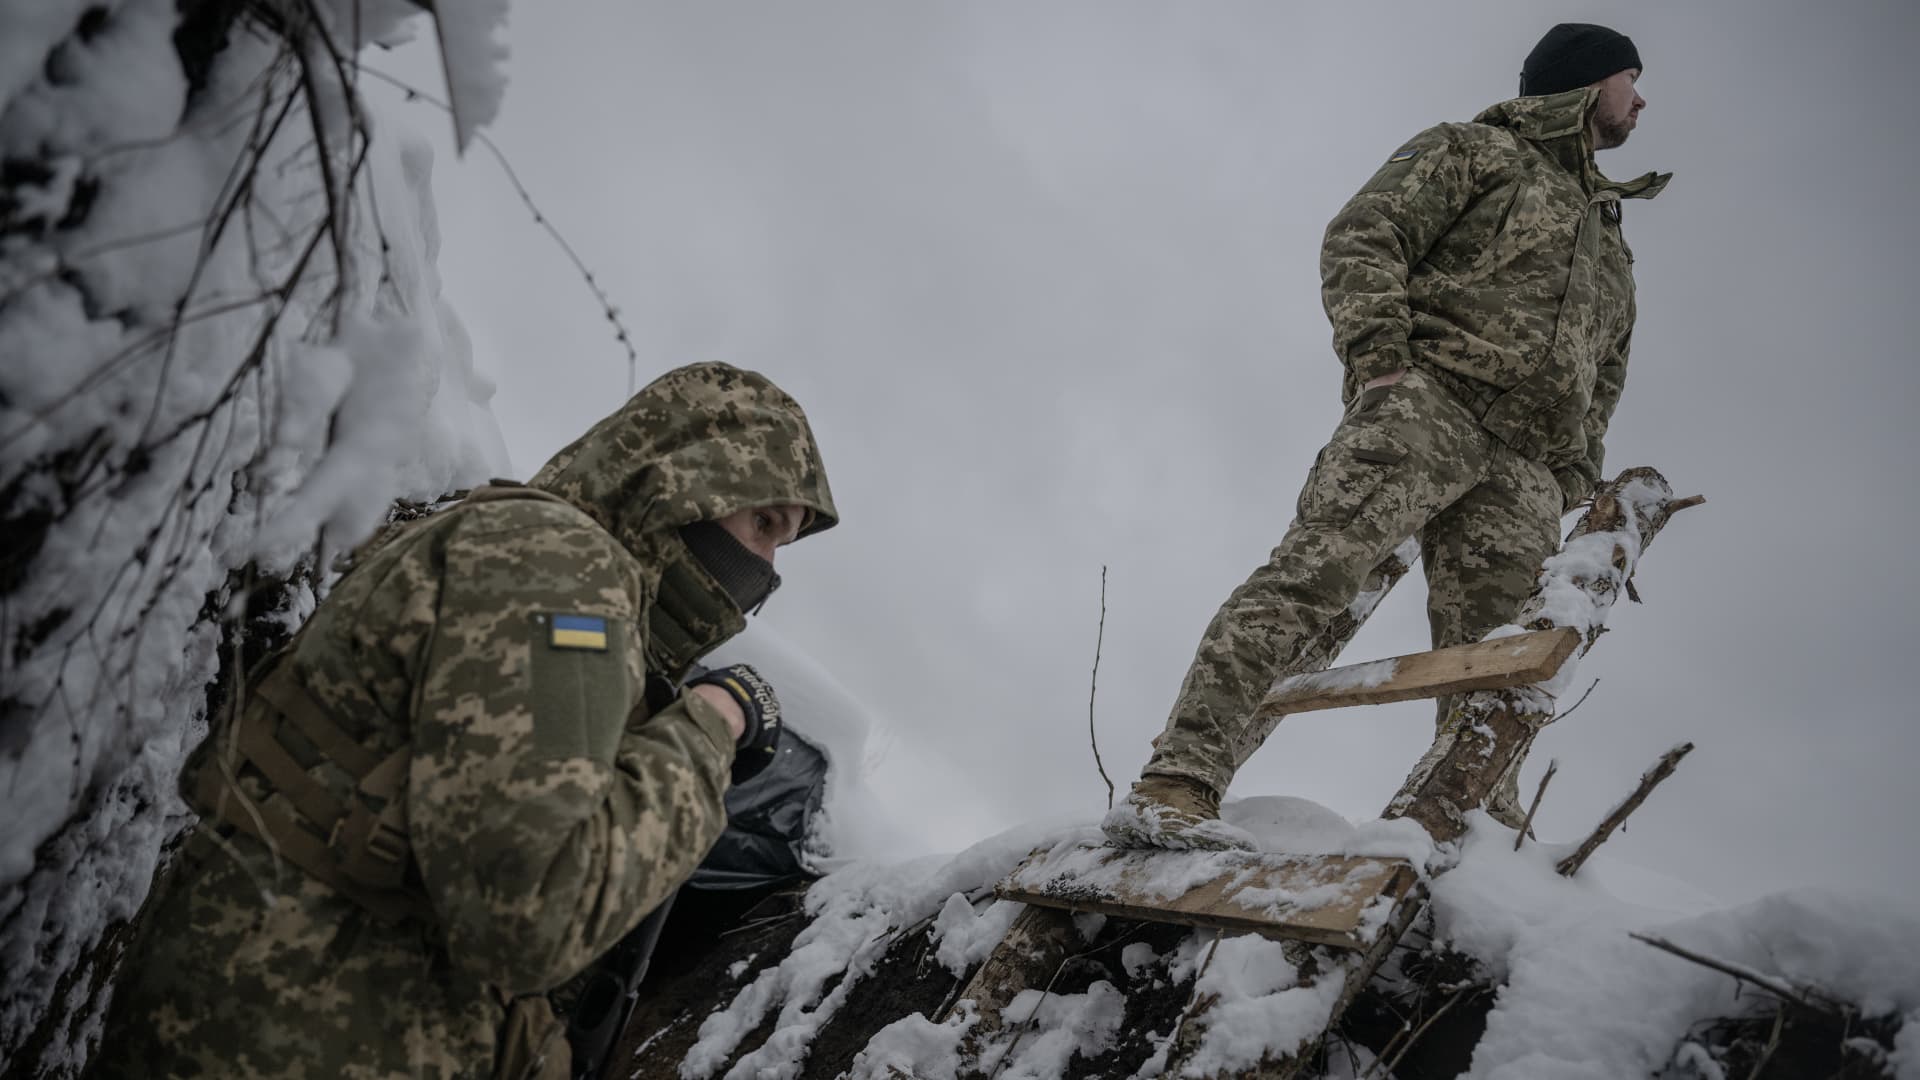 Ukraine war live updates: Winter storms batter Russia and Ukraine, wreaking havoc, death and destruction ... but war continues